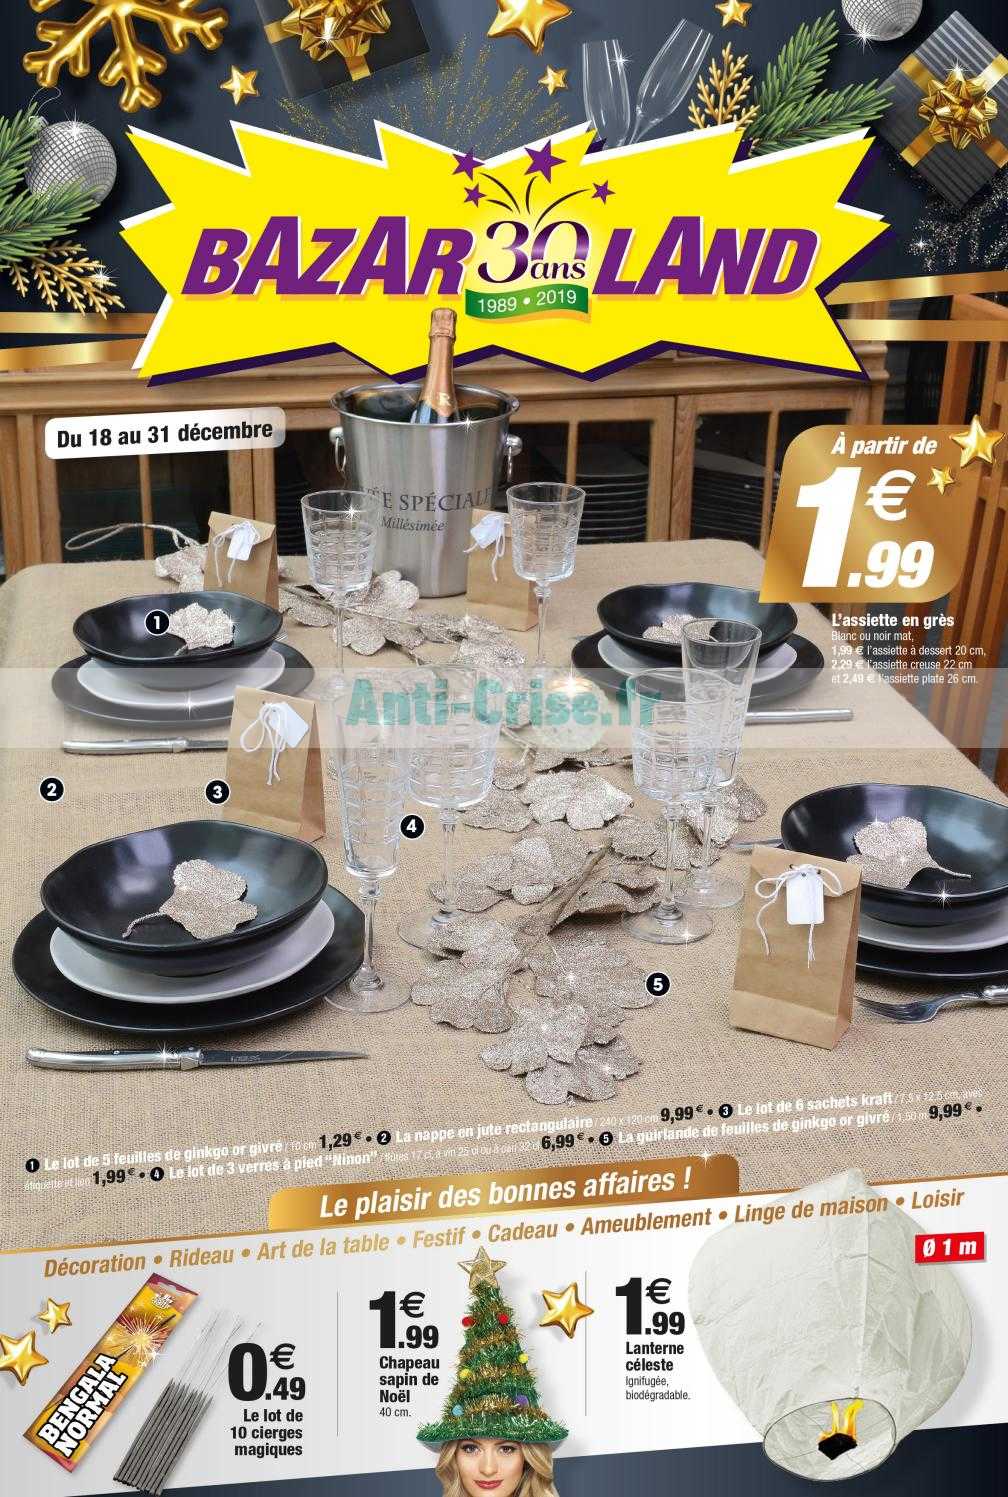 Promo La bombe de table chez Bazarland